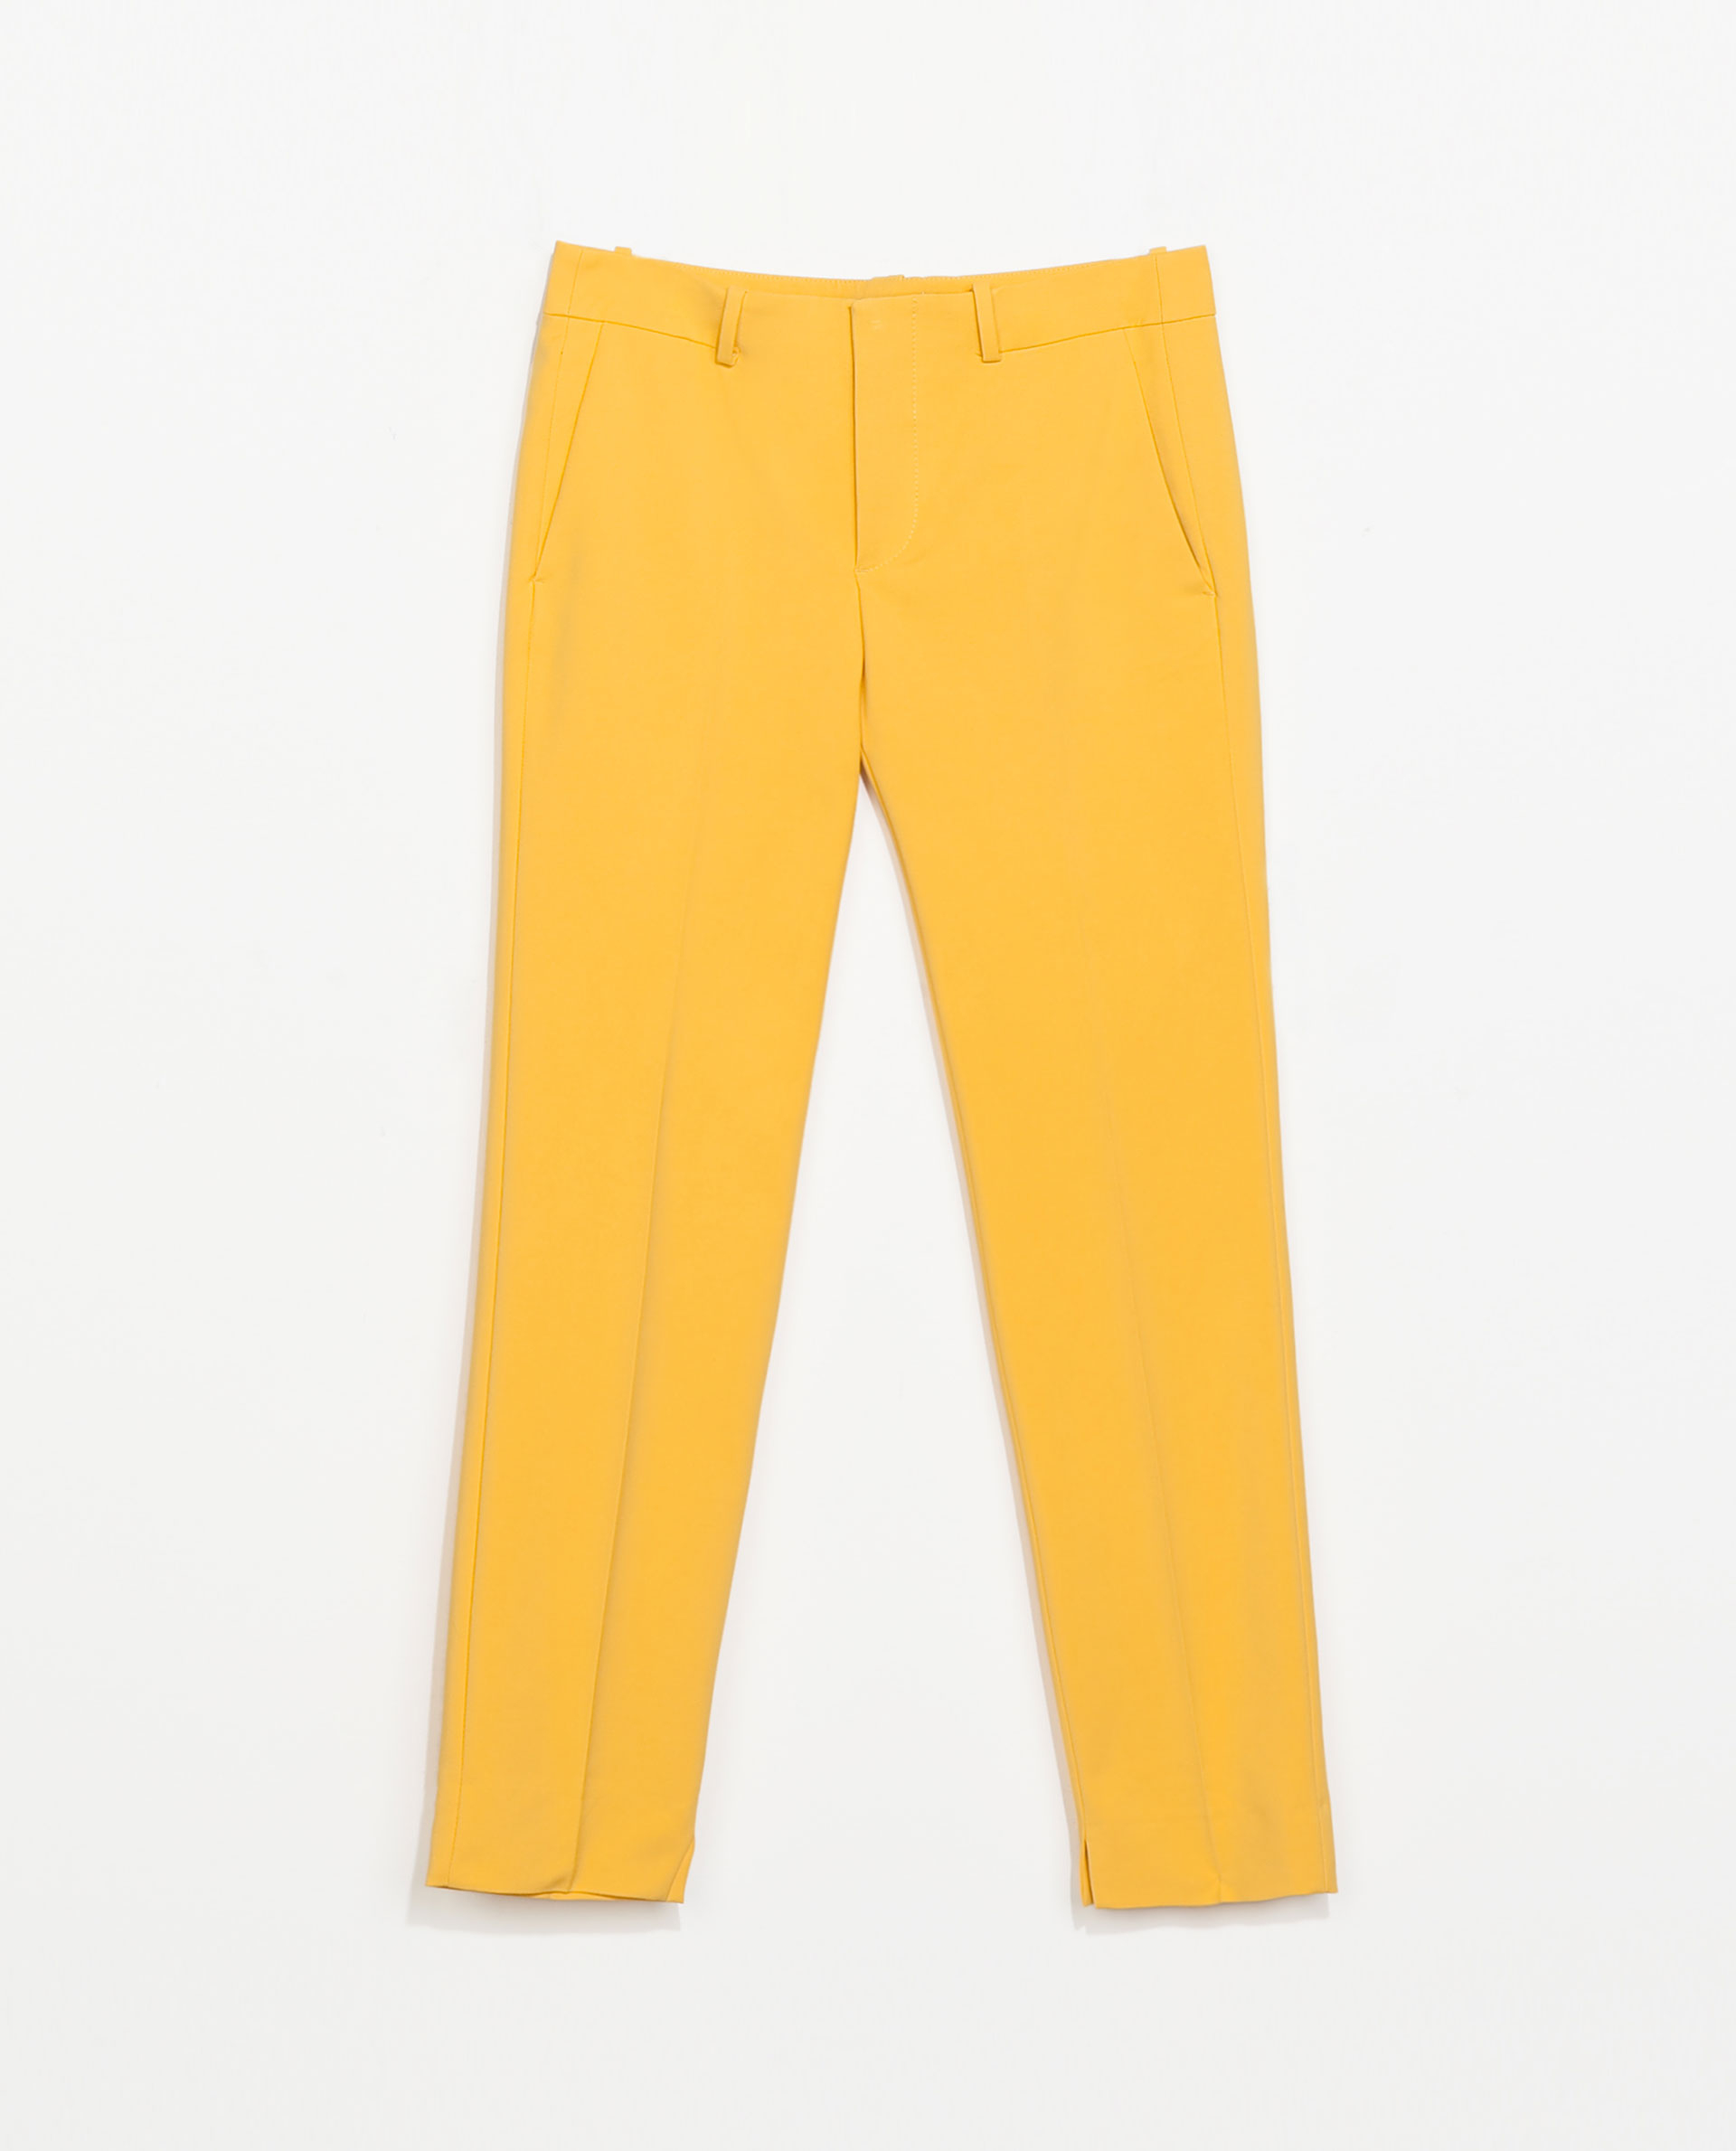 zara-yellow-cotton-trousers-product-1-18106500-5-047632052-normal.jpeg